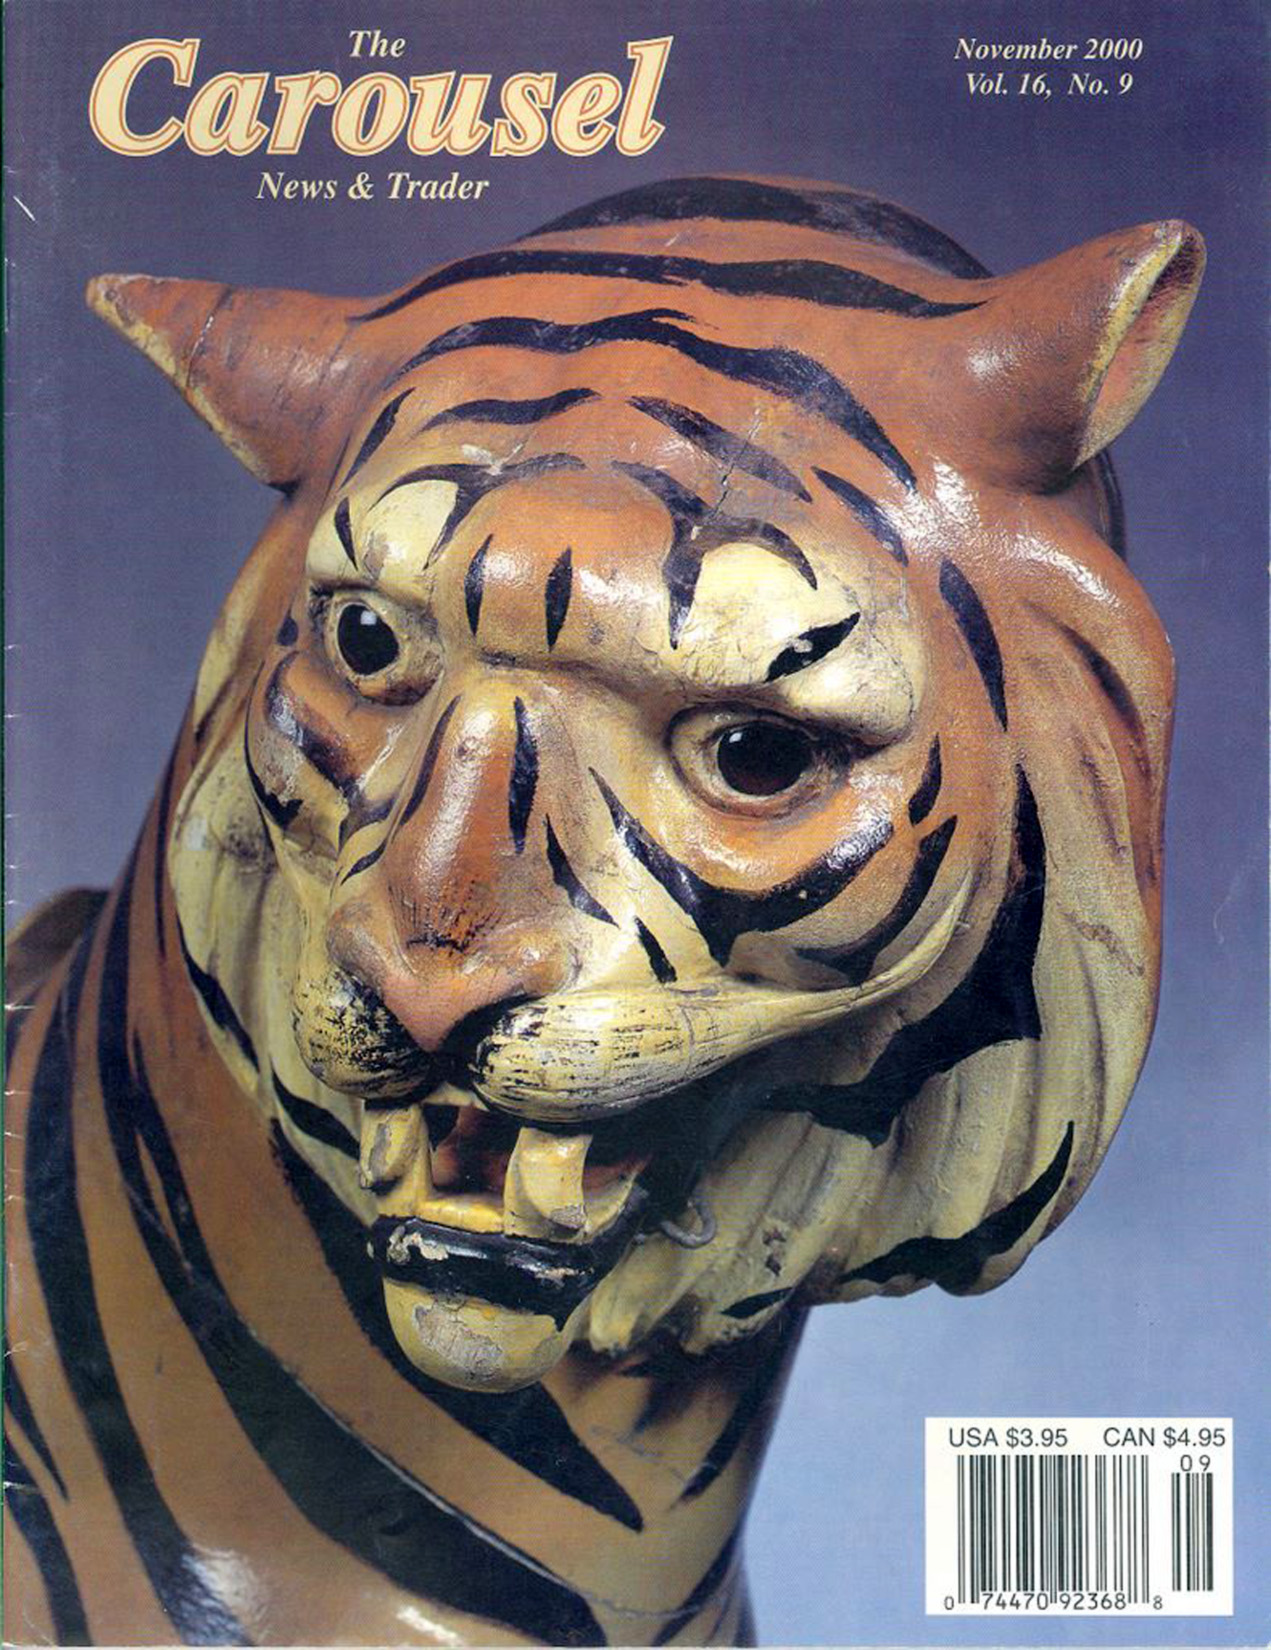 Issue No. 9, Vol. 16 – November 2000